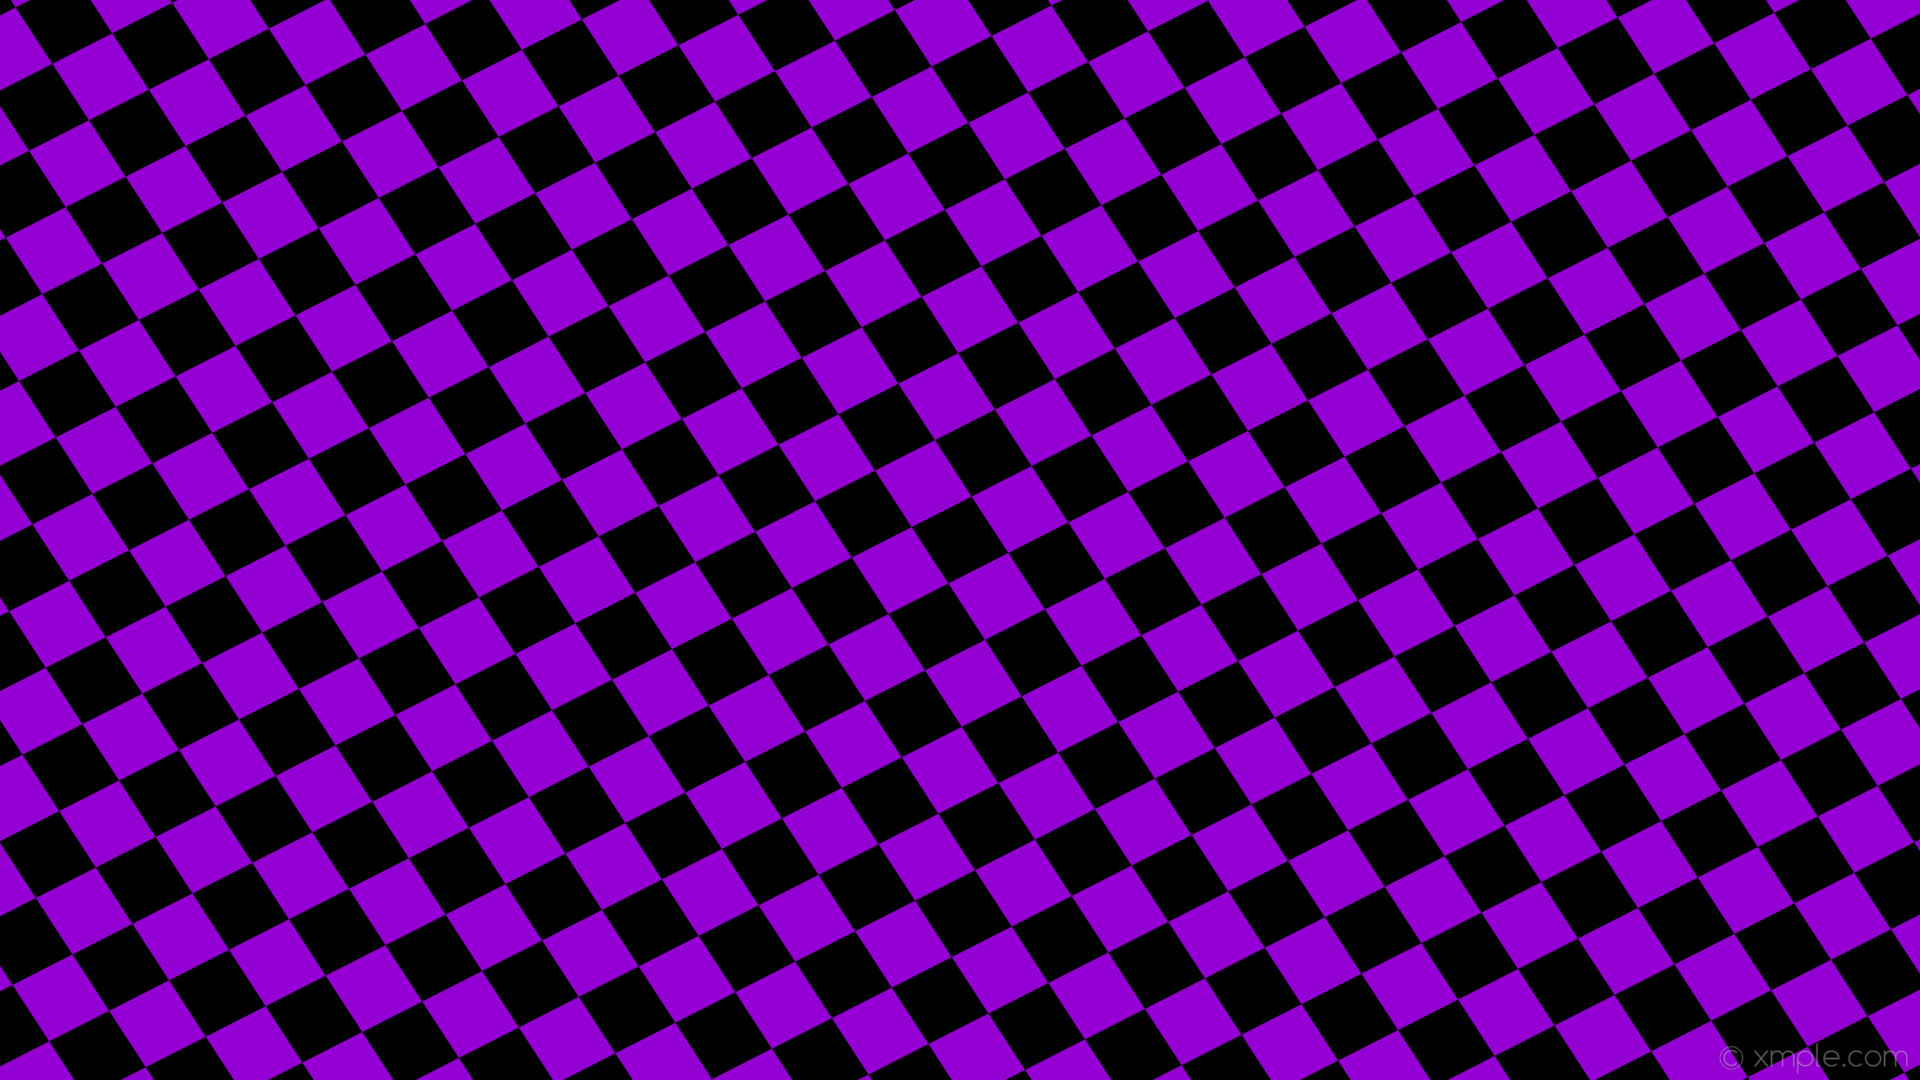 1920x1080 wallpaper lozenge black purple diamond rhombus dark violet #000000 #9400d3  165Â° 100px 90px